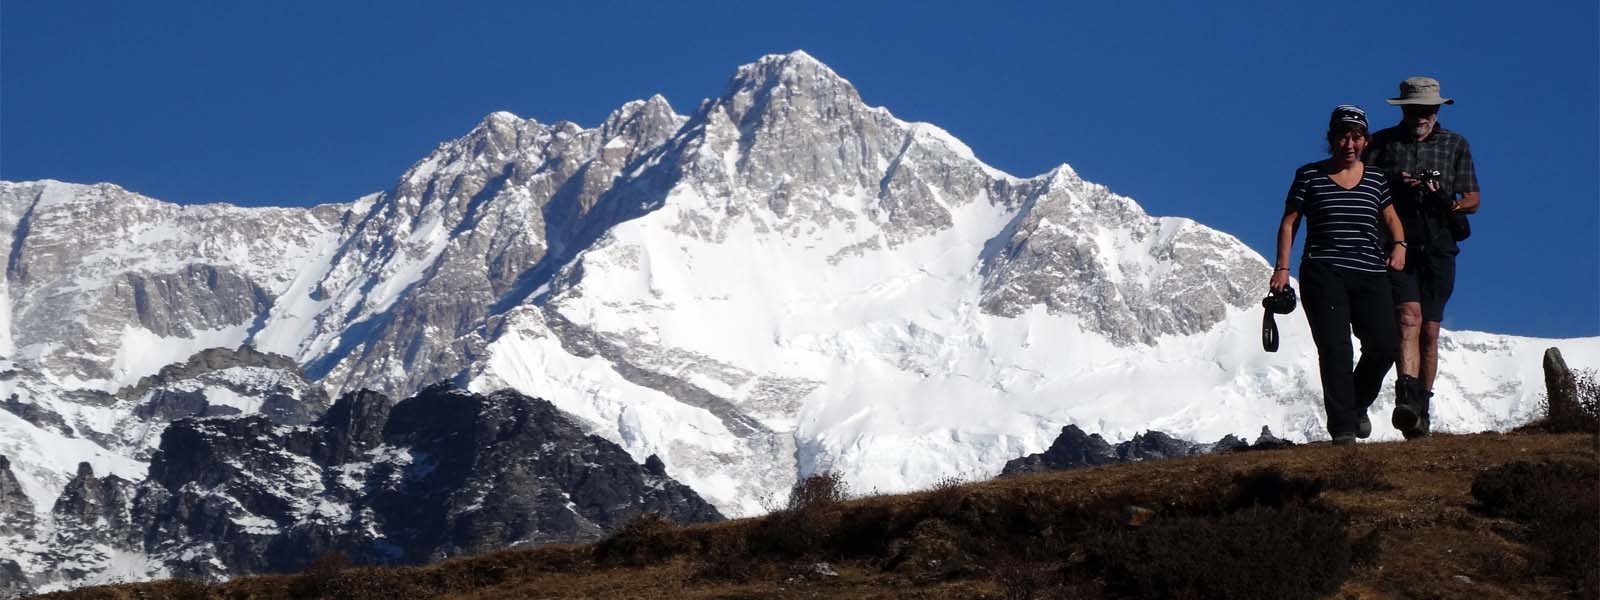 Uttarey Trekking from Sikkim